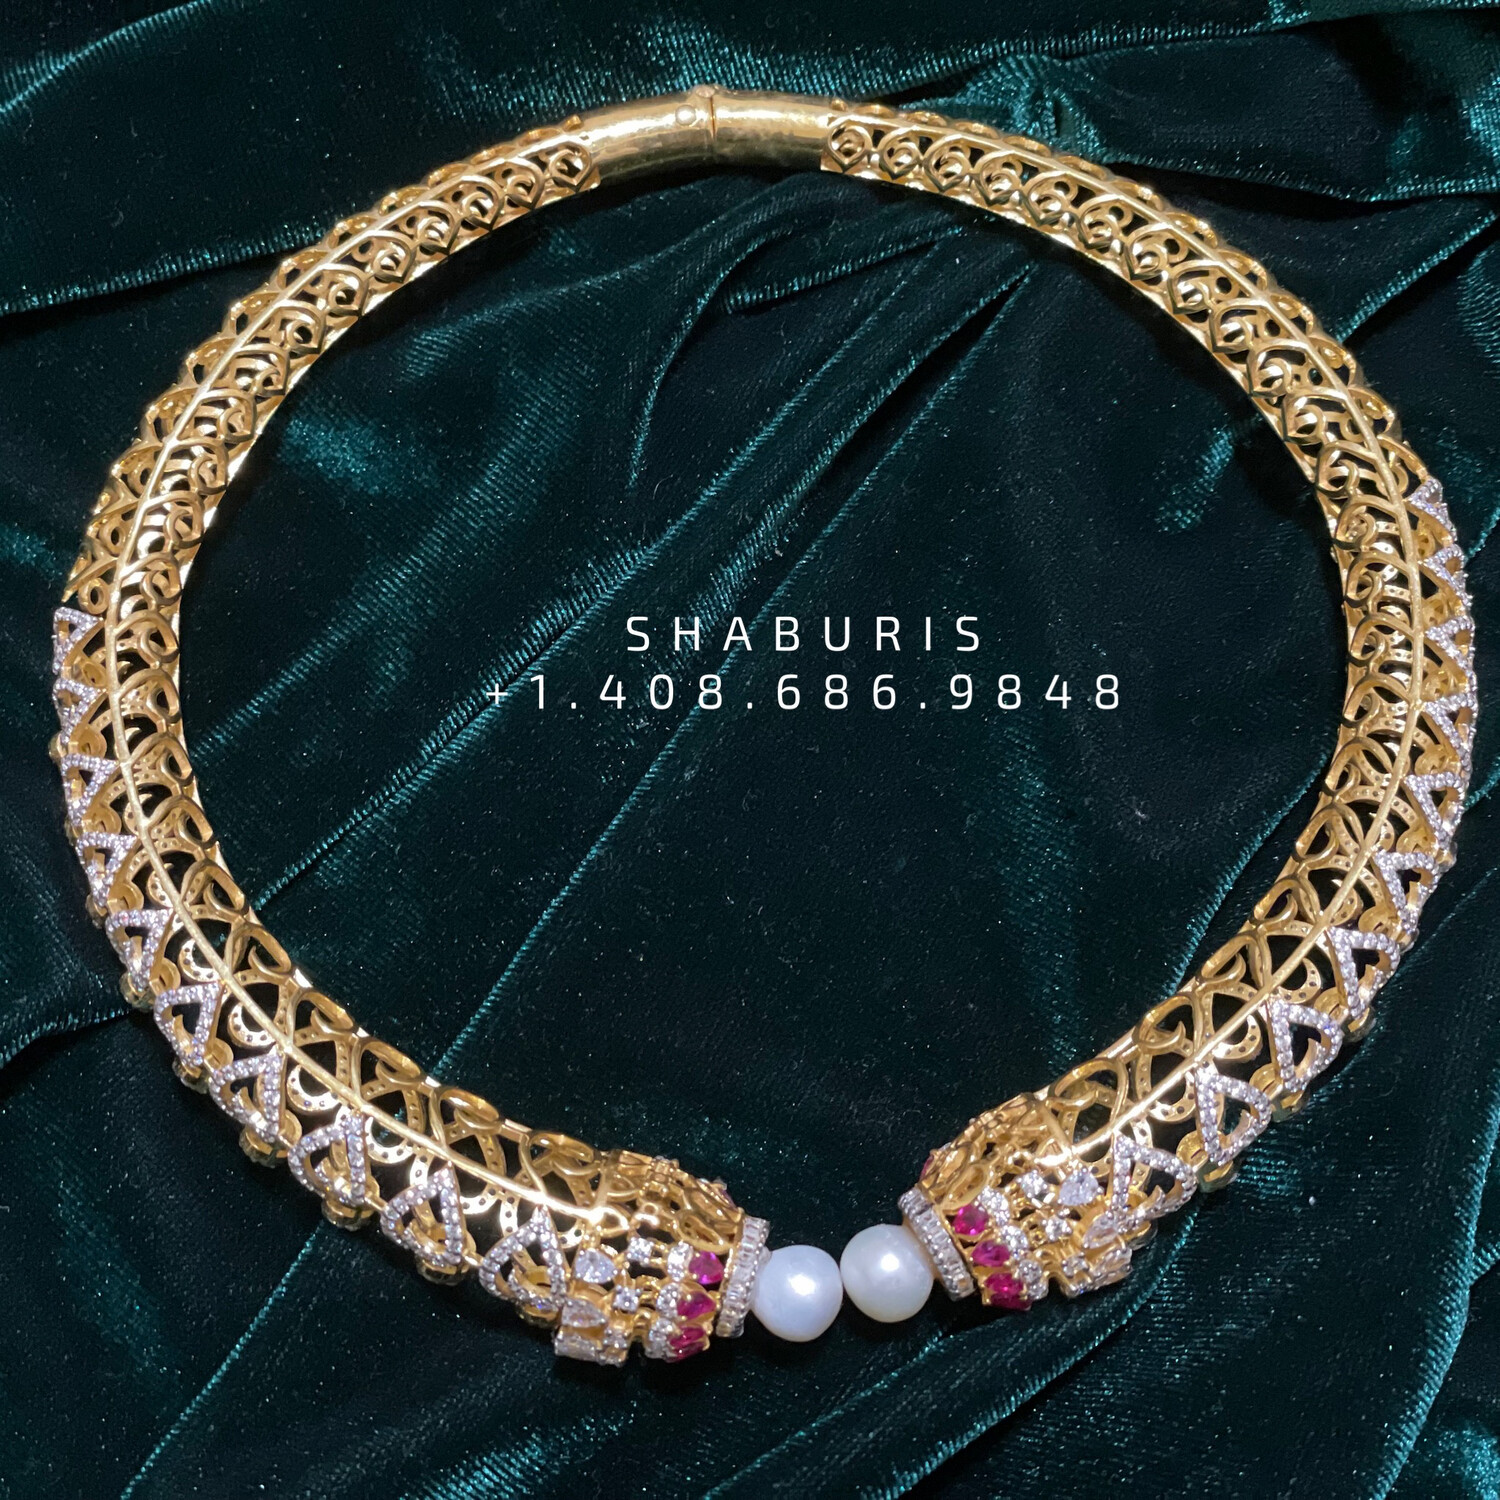 Diamond kante ,South Indian Jewellery,South Indian Jewelry,Kante Necklace,silver jewelry Designs - NIHIRA-SHABURIS